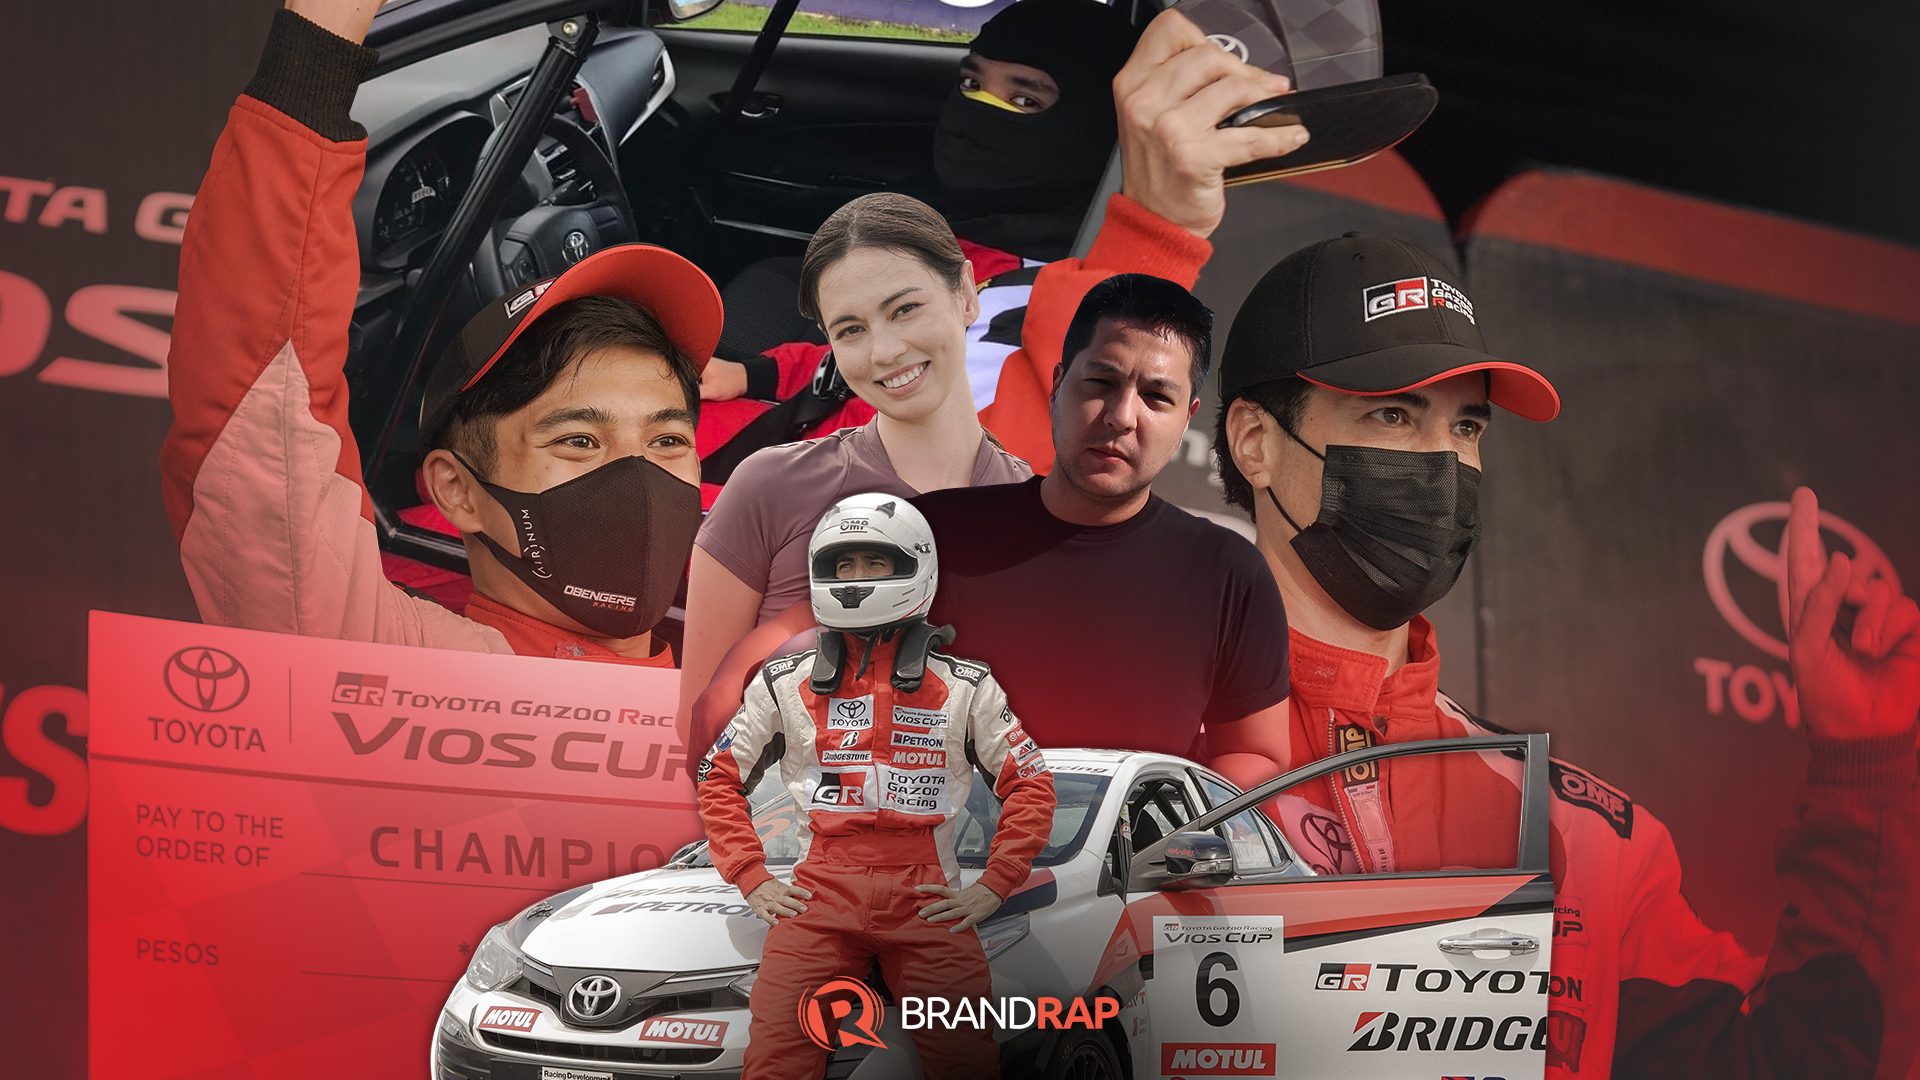 Pro-racing dreams come true at the Toyota Gazoo Racing Vios Cup